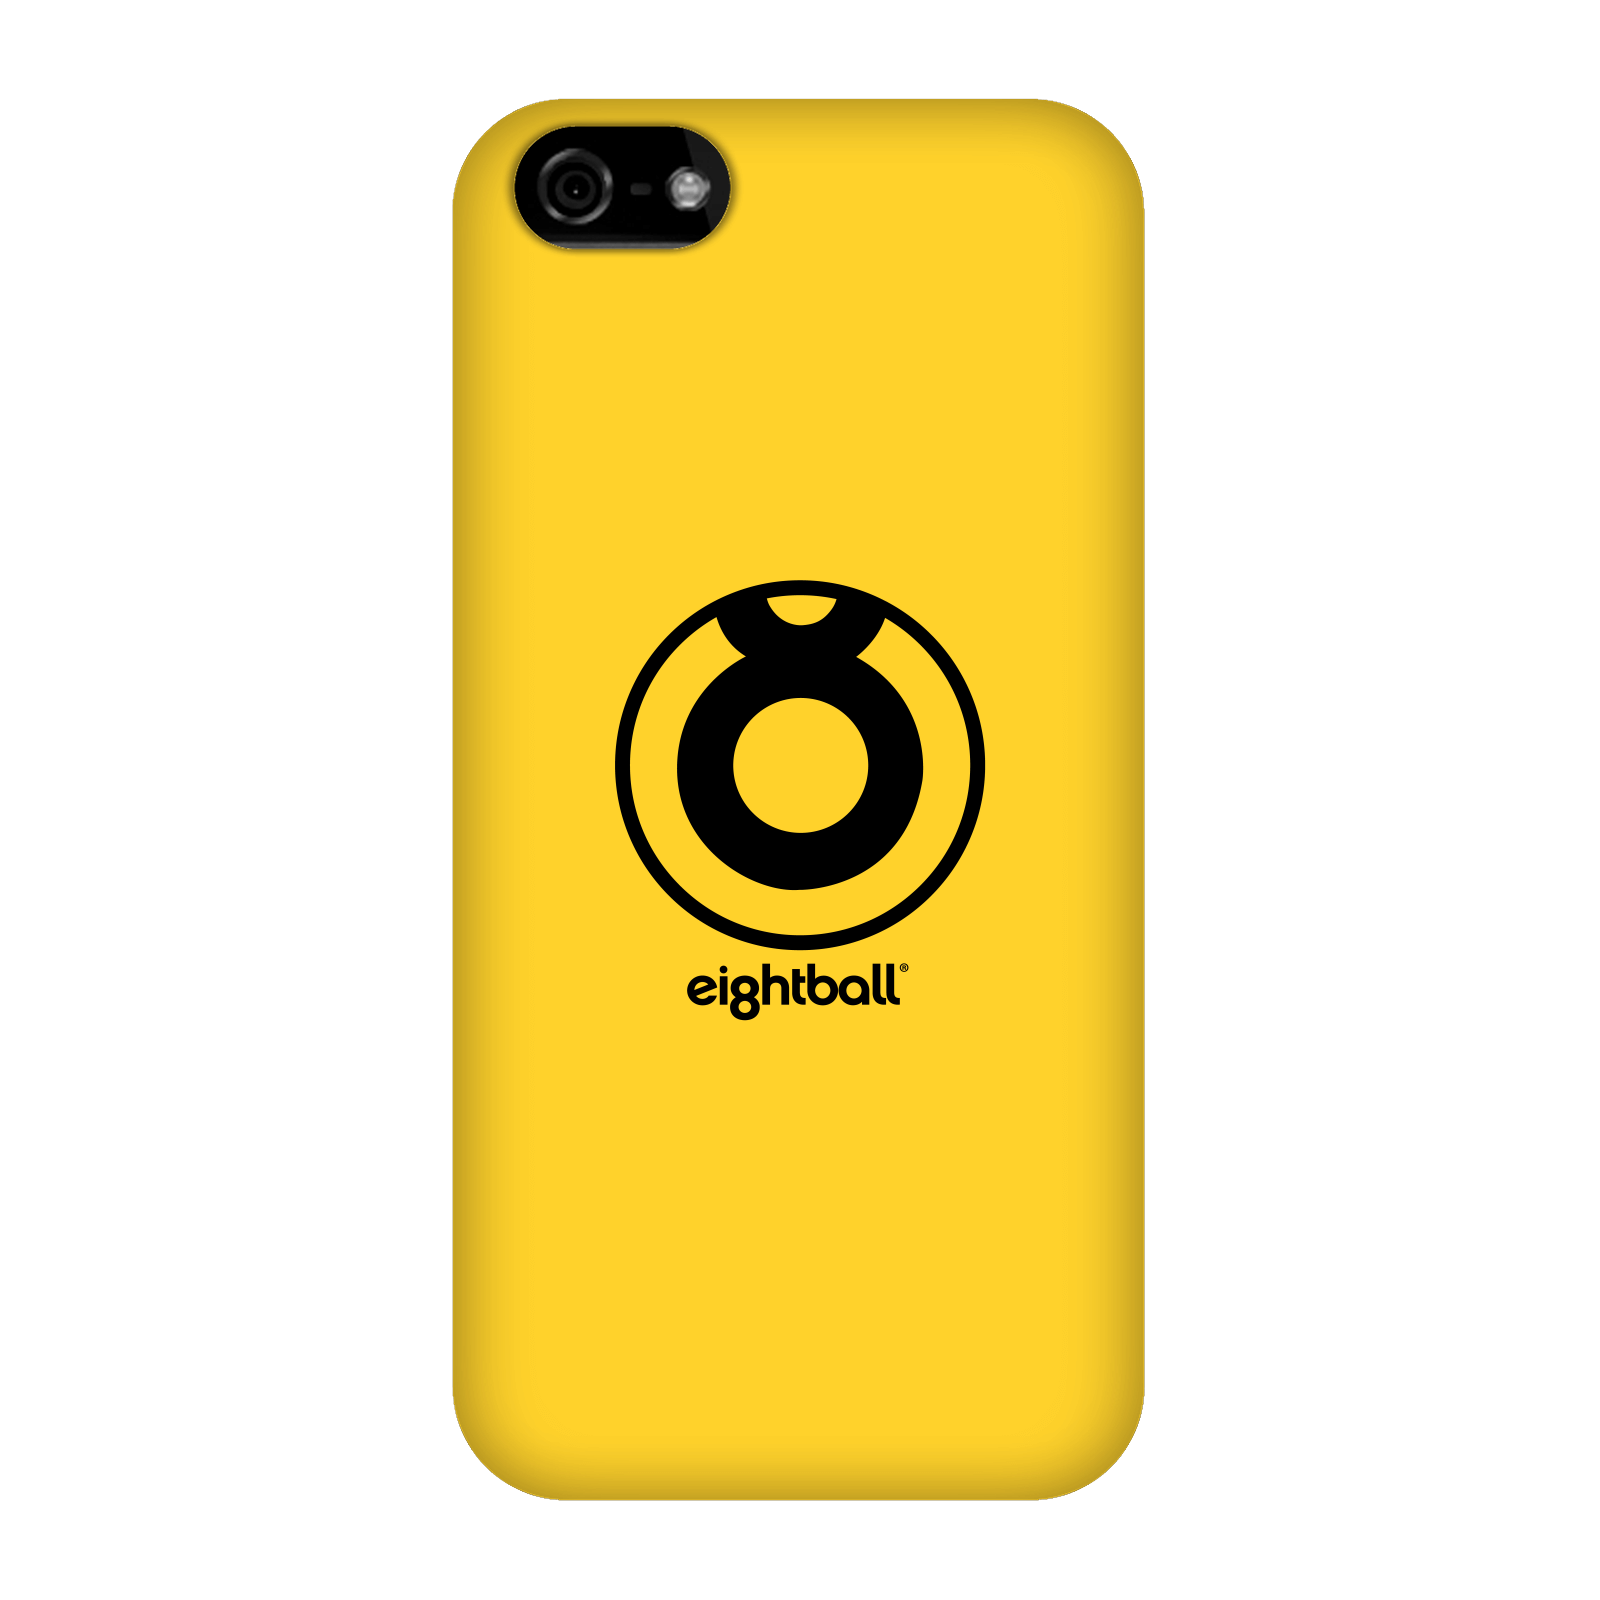 Funda Móvil Ei8htball Large Circle Logo para iPhone y Android - iPhone 5C - Carcasa rígida - Mate